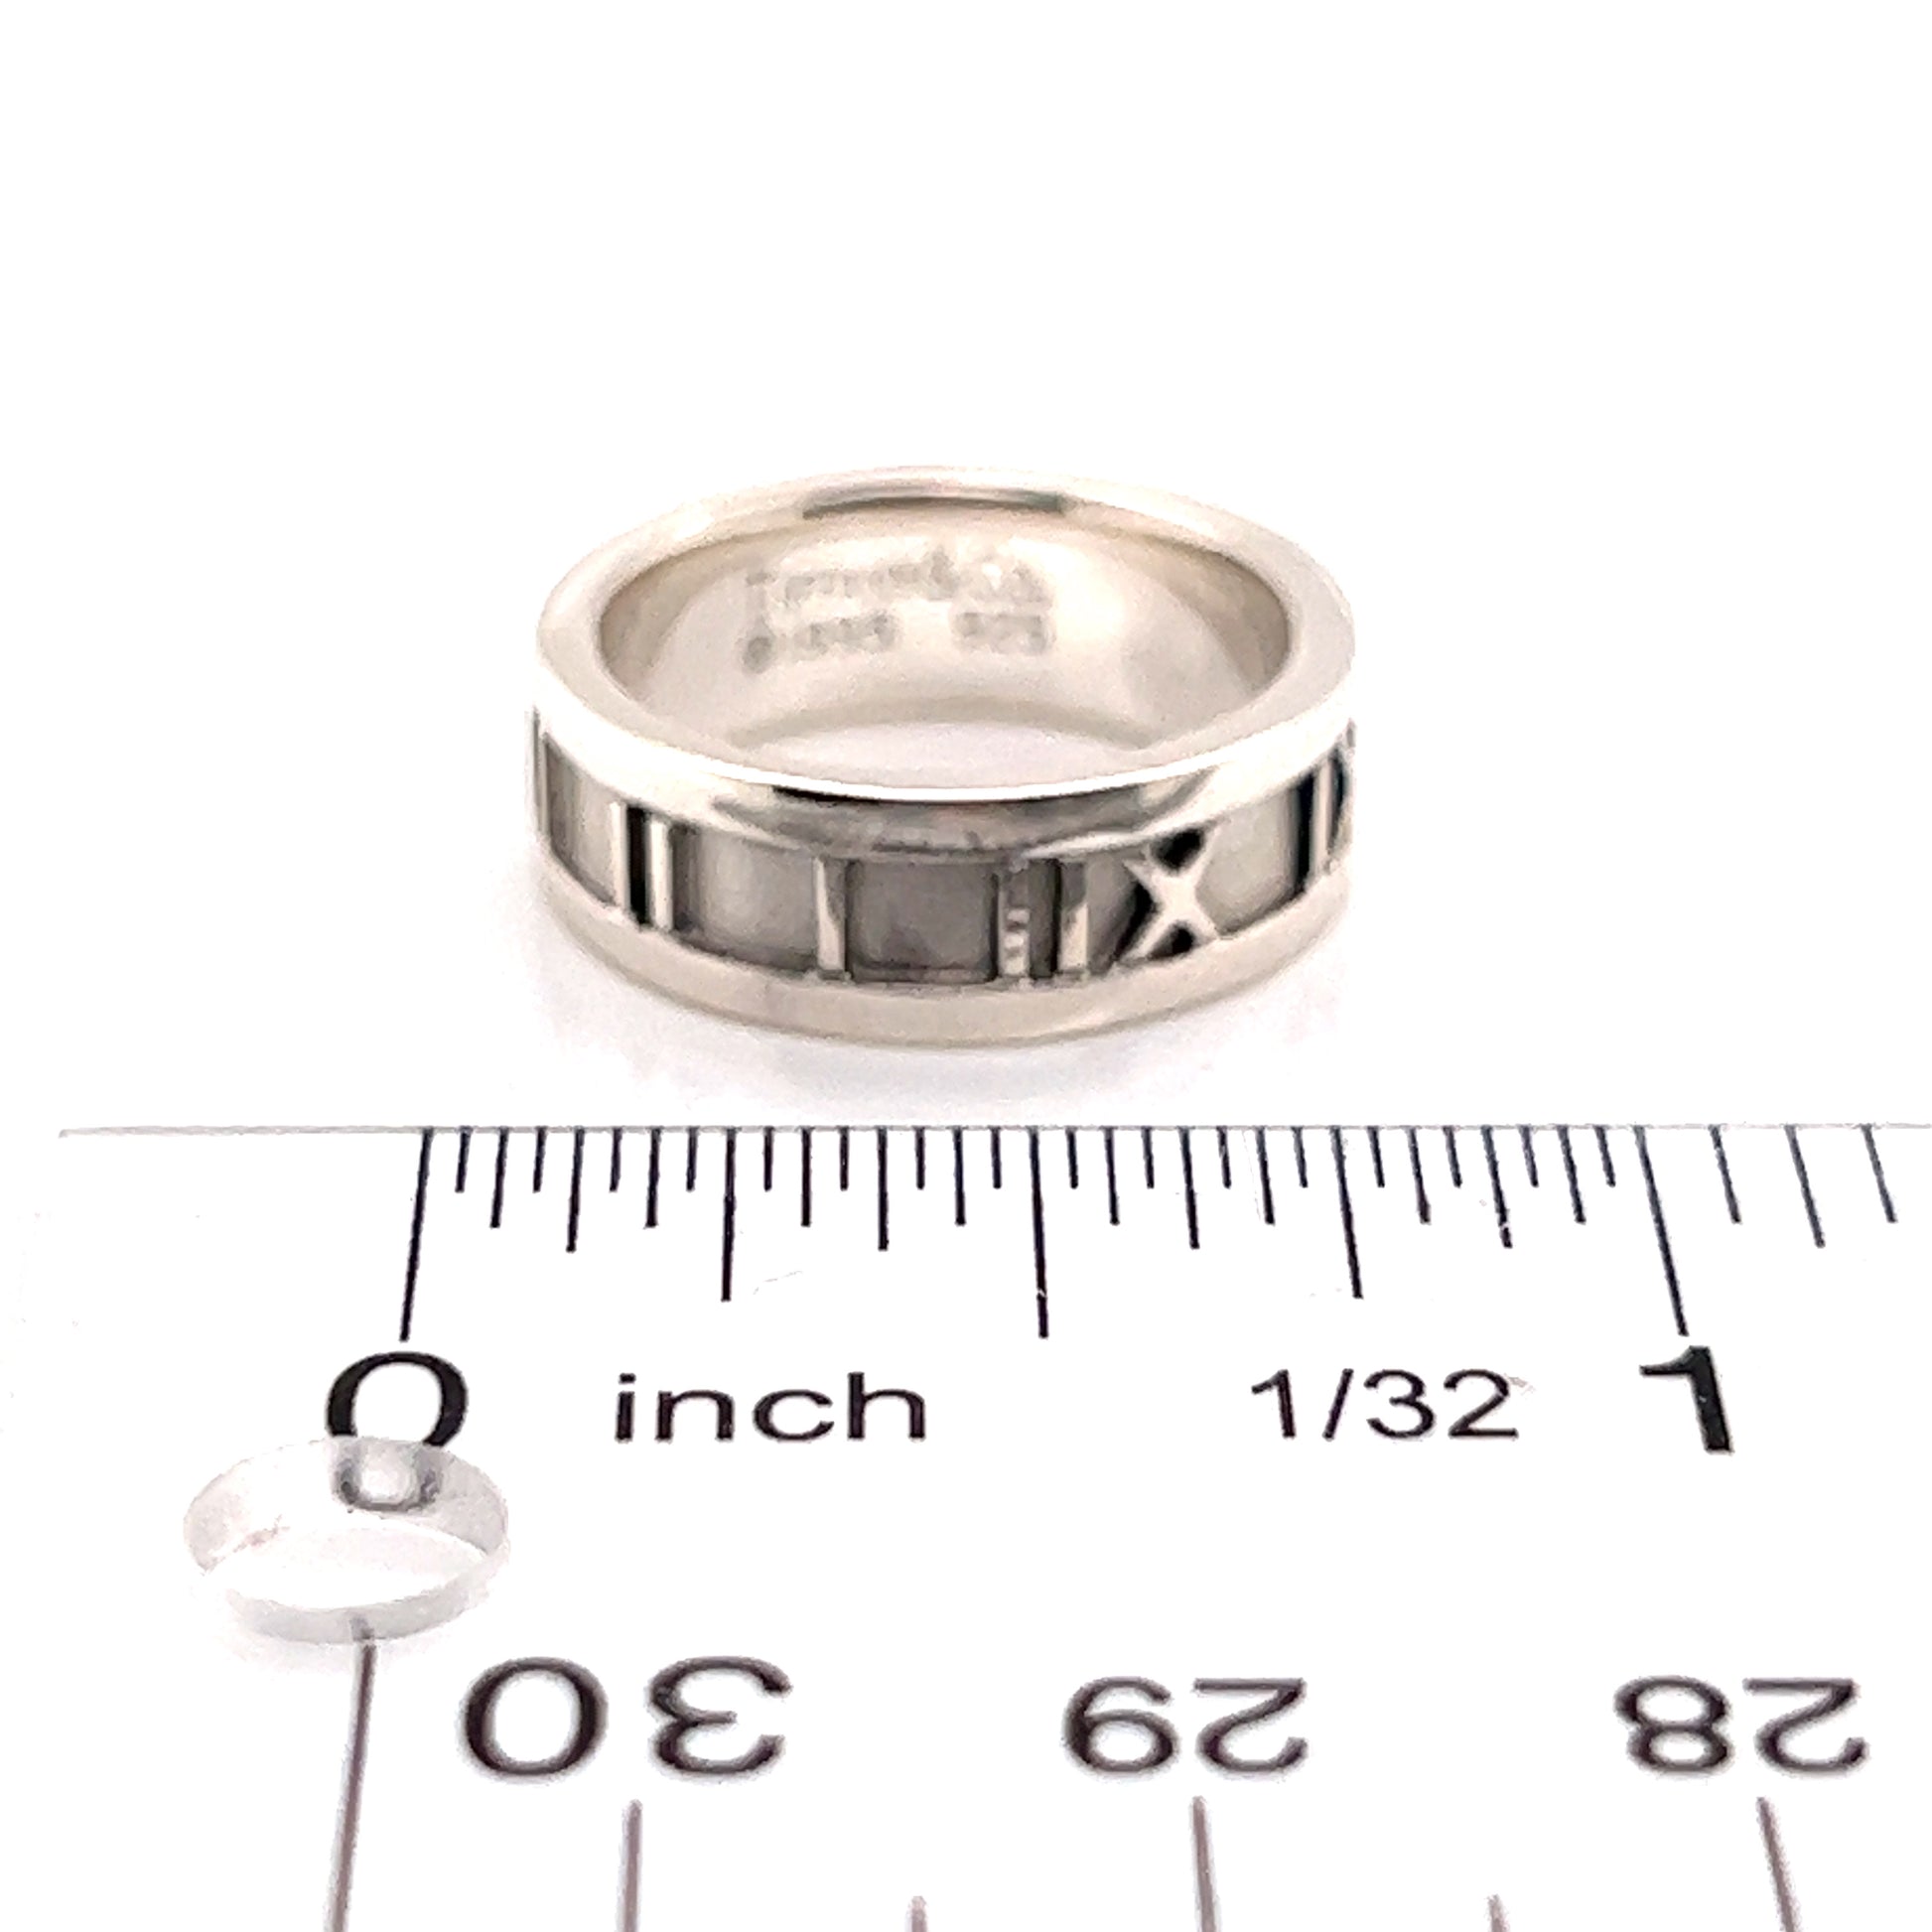 Tiffany & Co Estate Sterling Silver Ring Size 5.25, 4.9 Grams TIF181